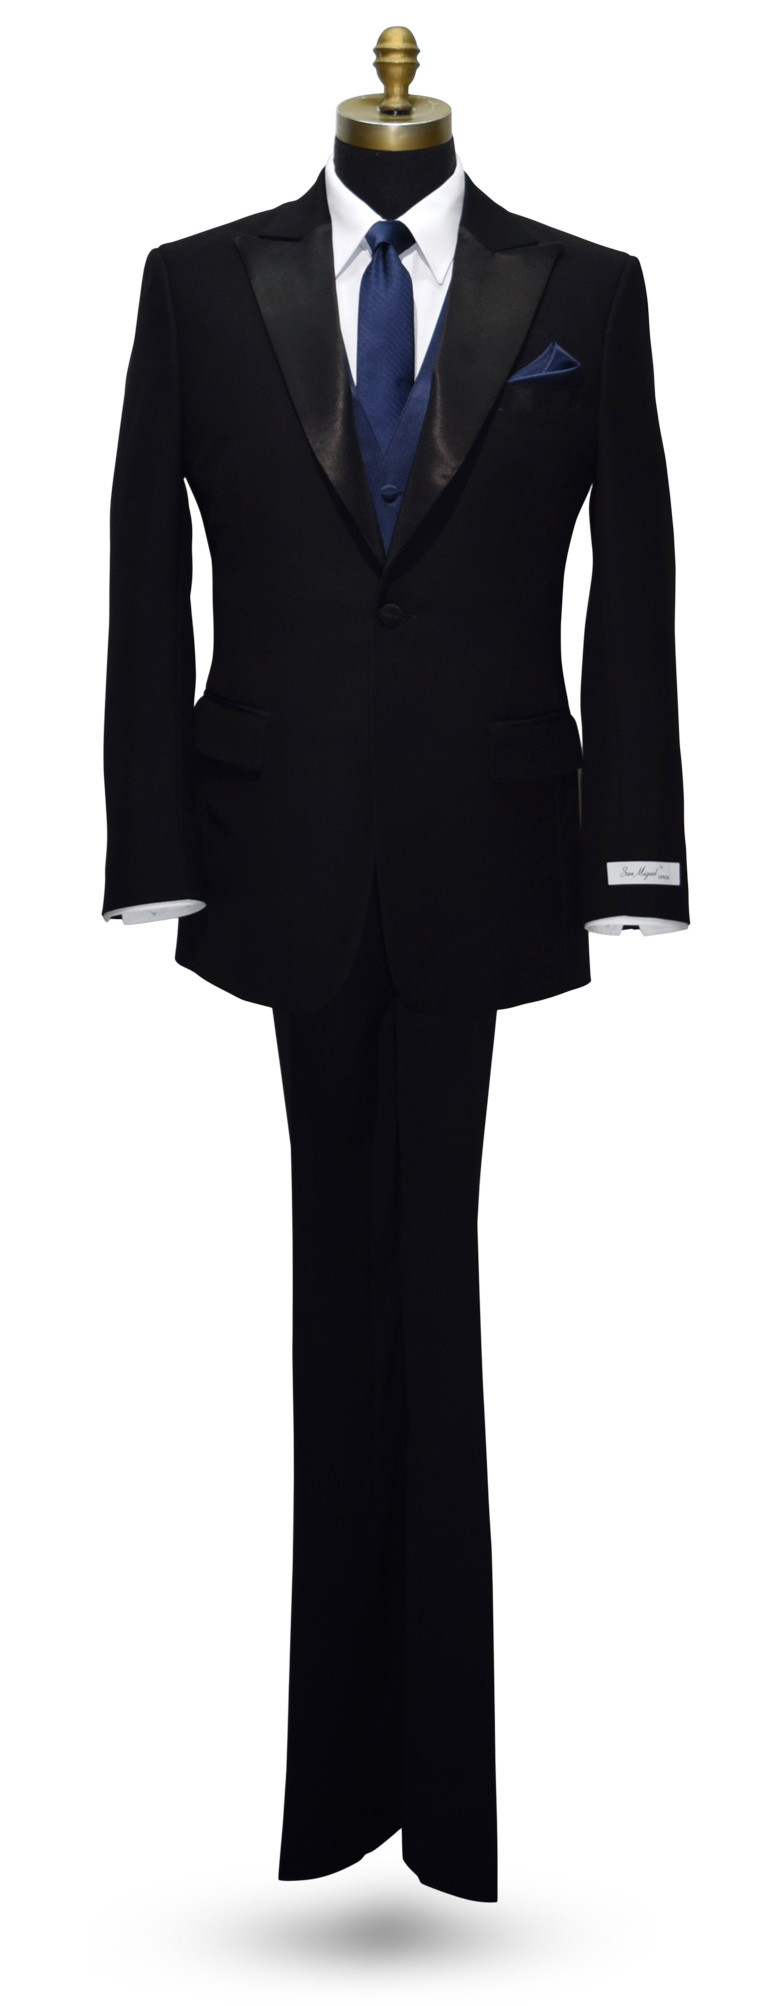 San Miguel black peak lapel tuxedo with navy blue vest and navy blue long tie